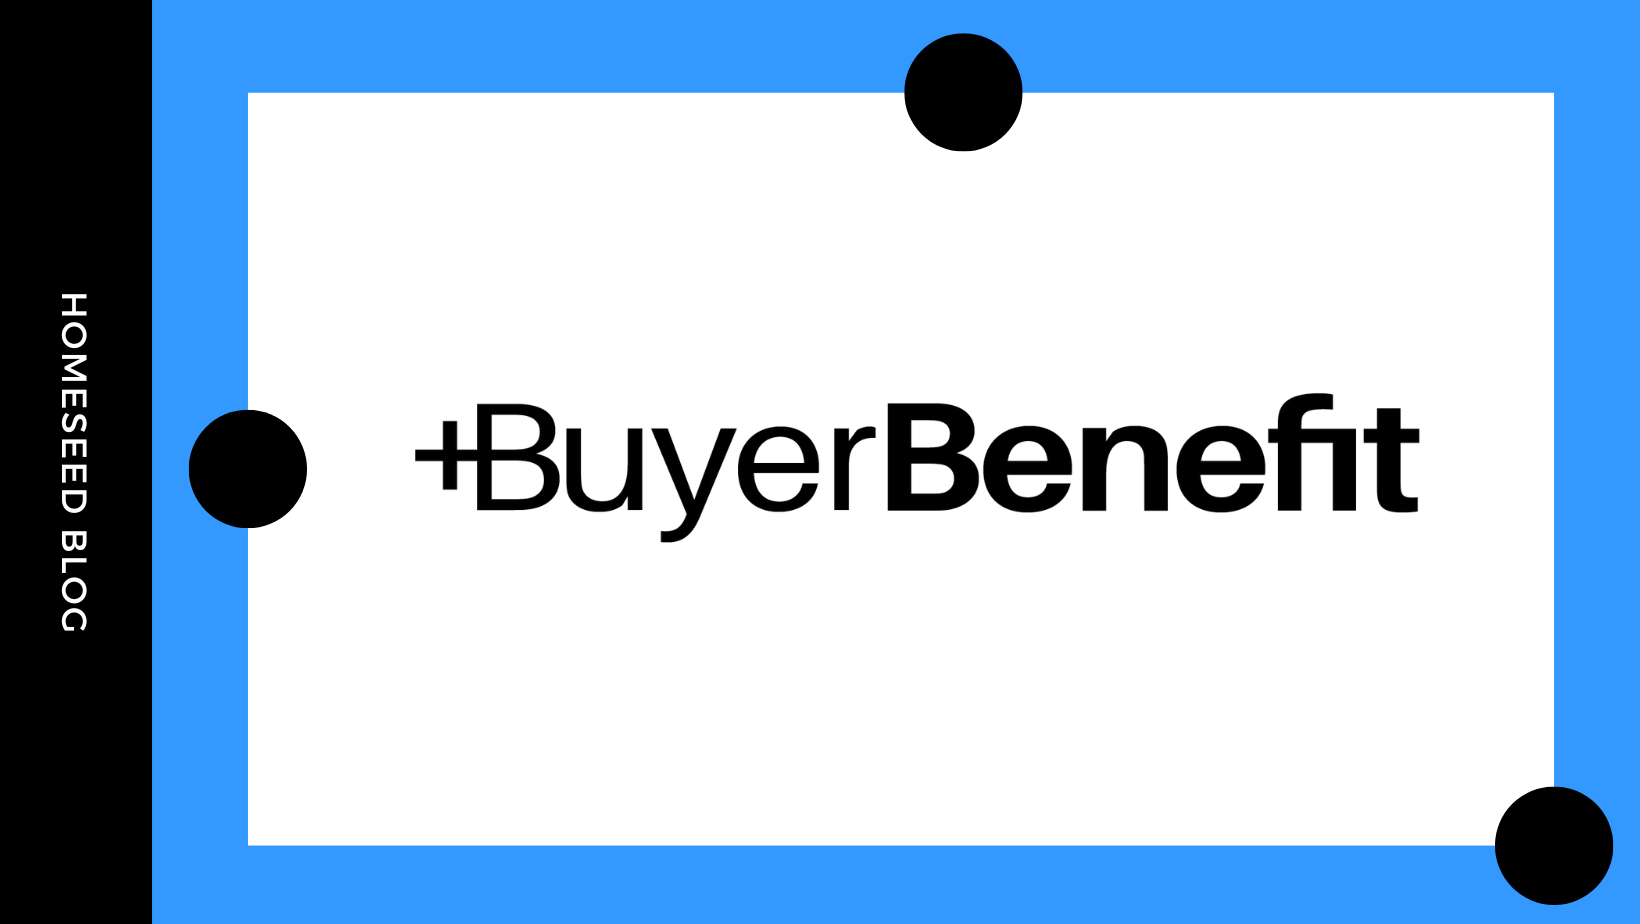 +BuyerBenefit Strategic Financing Partnership Program